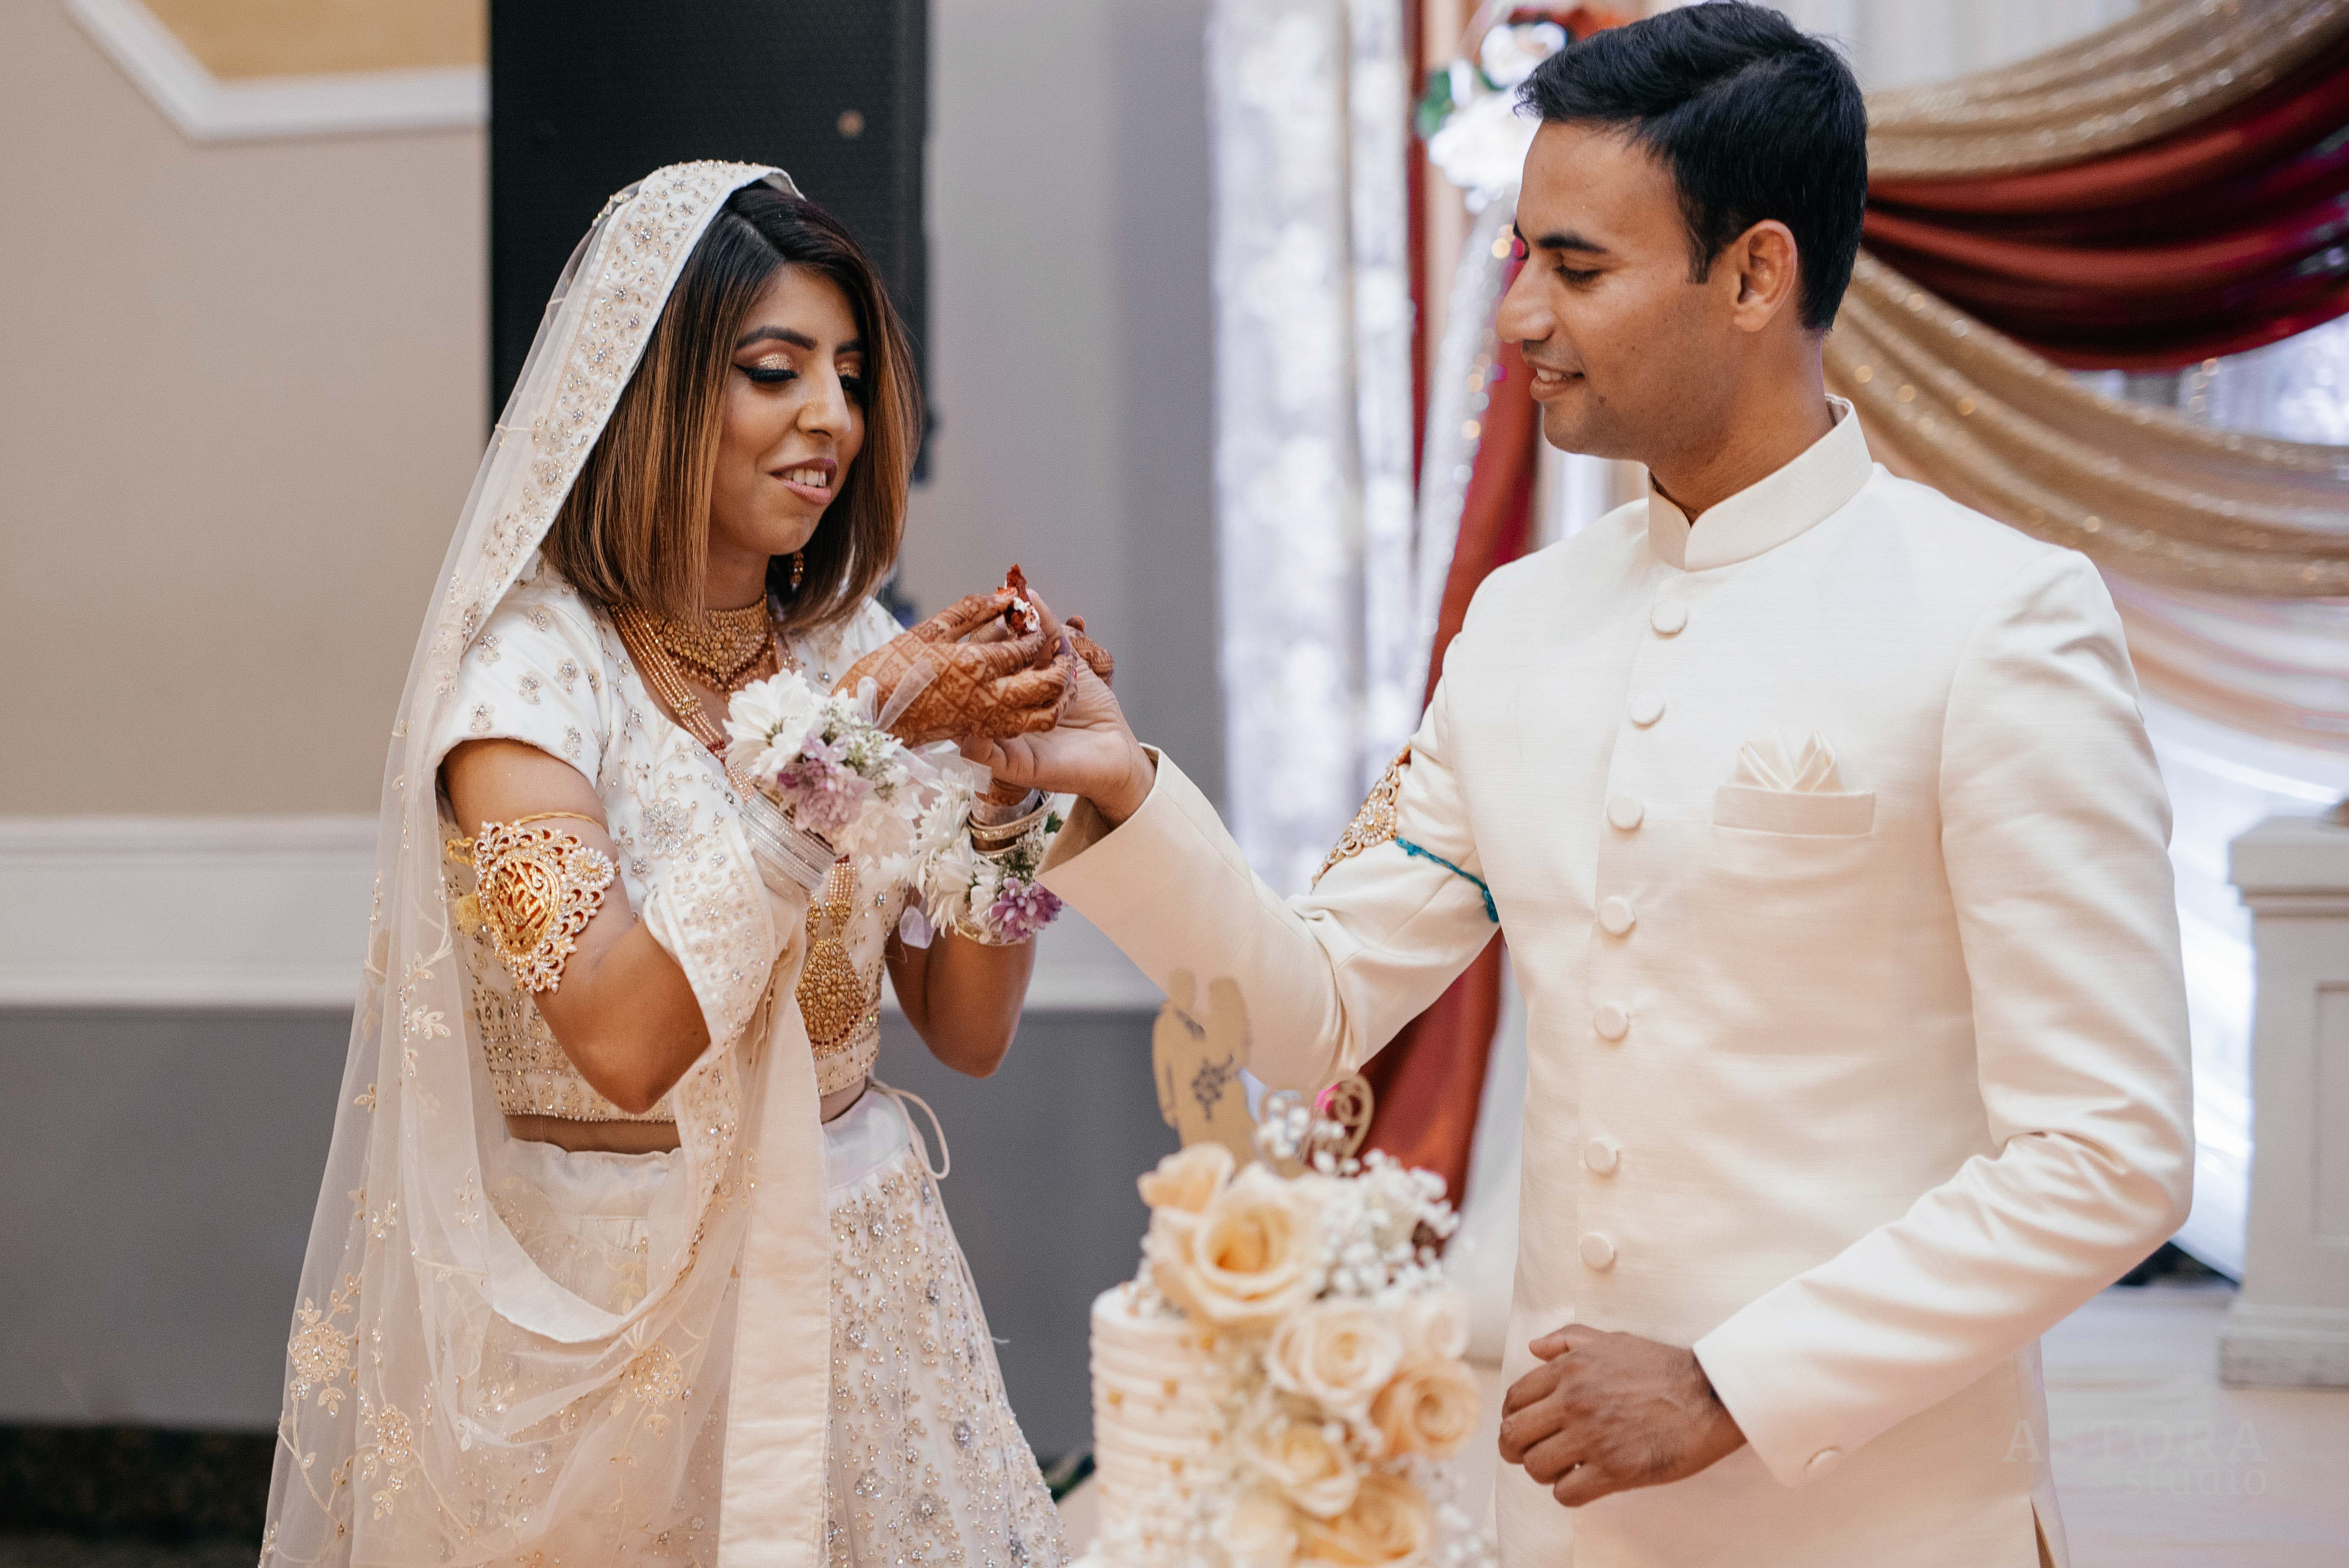 South Asian marriage image Toronto | Astora Studio